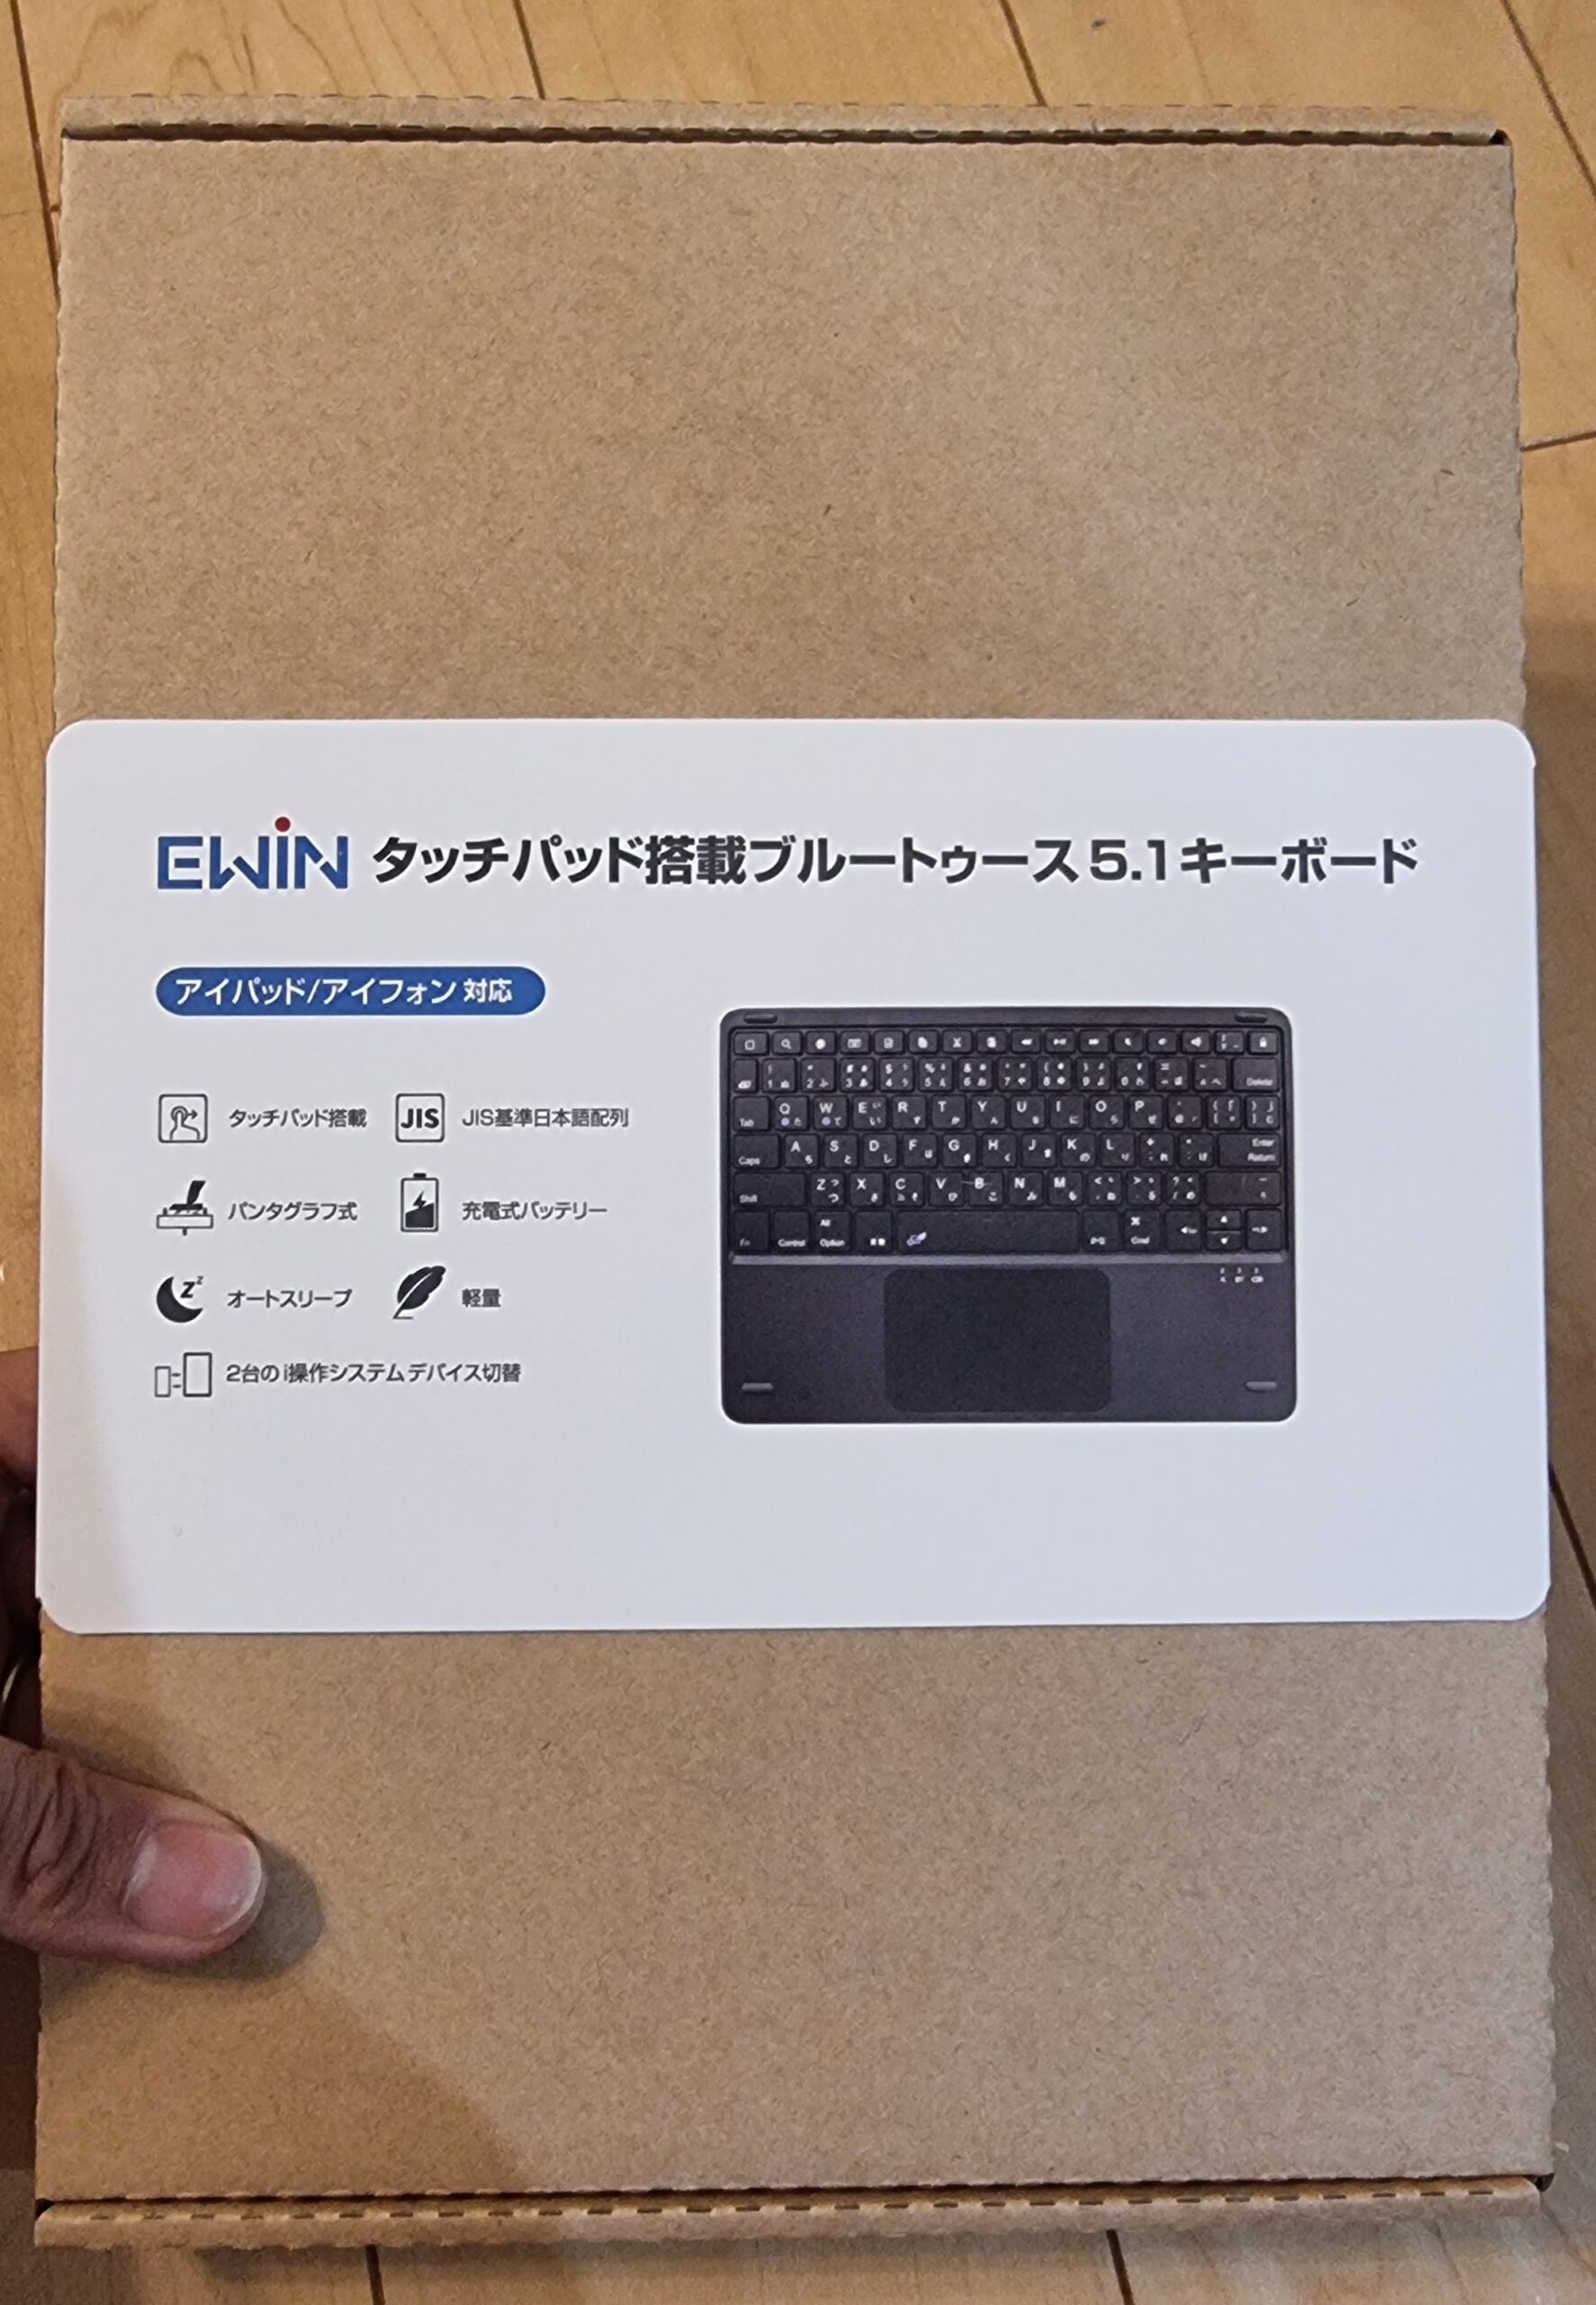 Ewinのipad&iPhone用Bluetoothキーボードを買いました